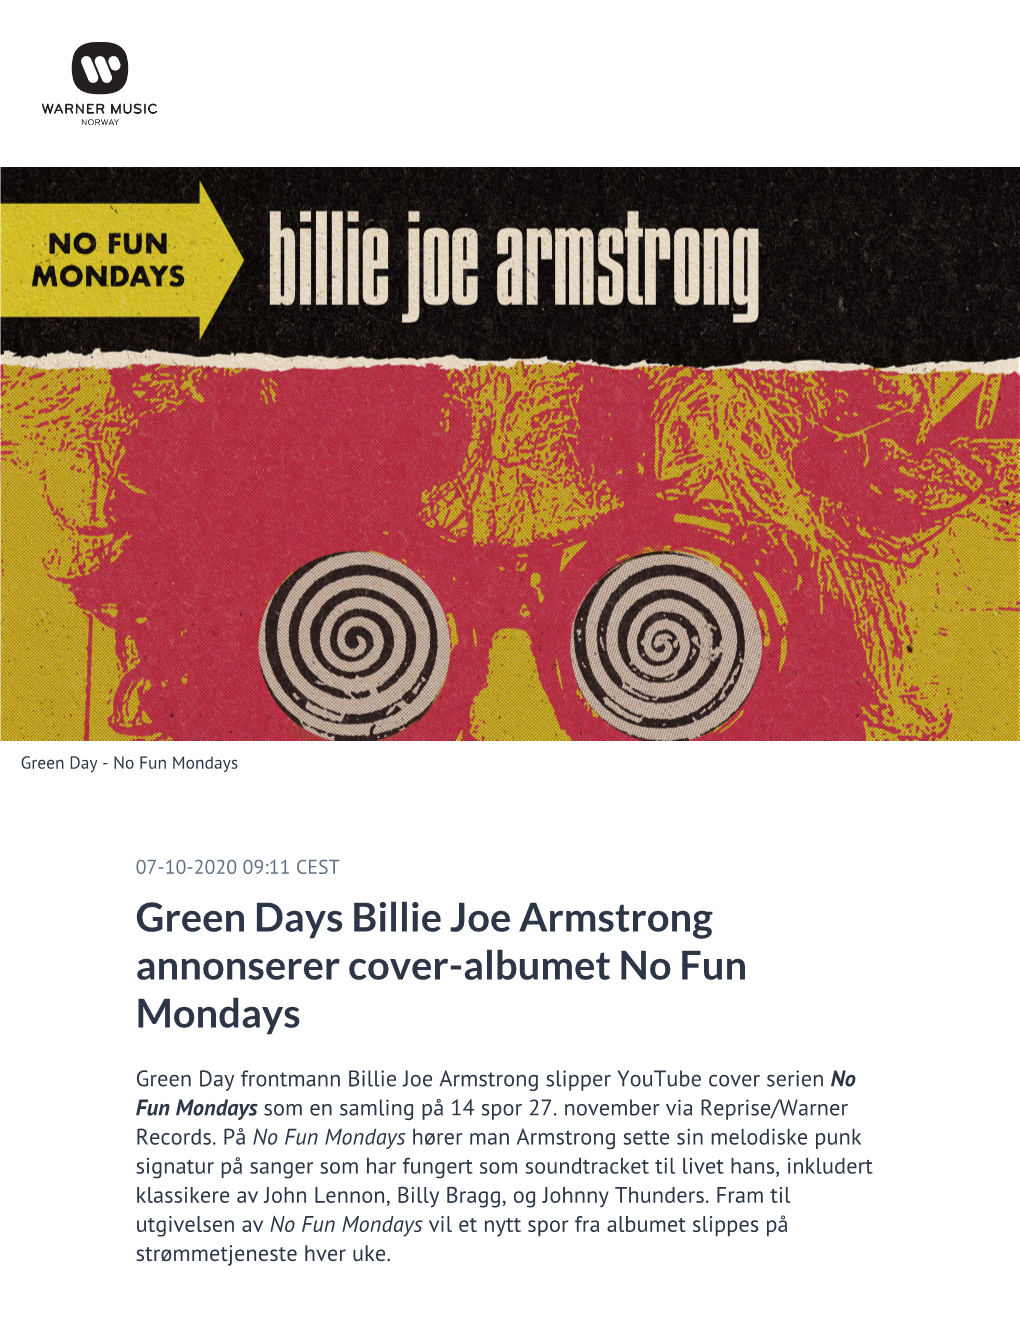 Green Days Billie Joe Armstrong Annonserer Cover-Albumet No Fun Mondays